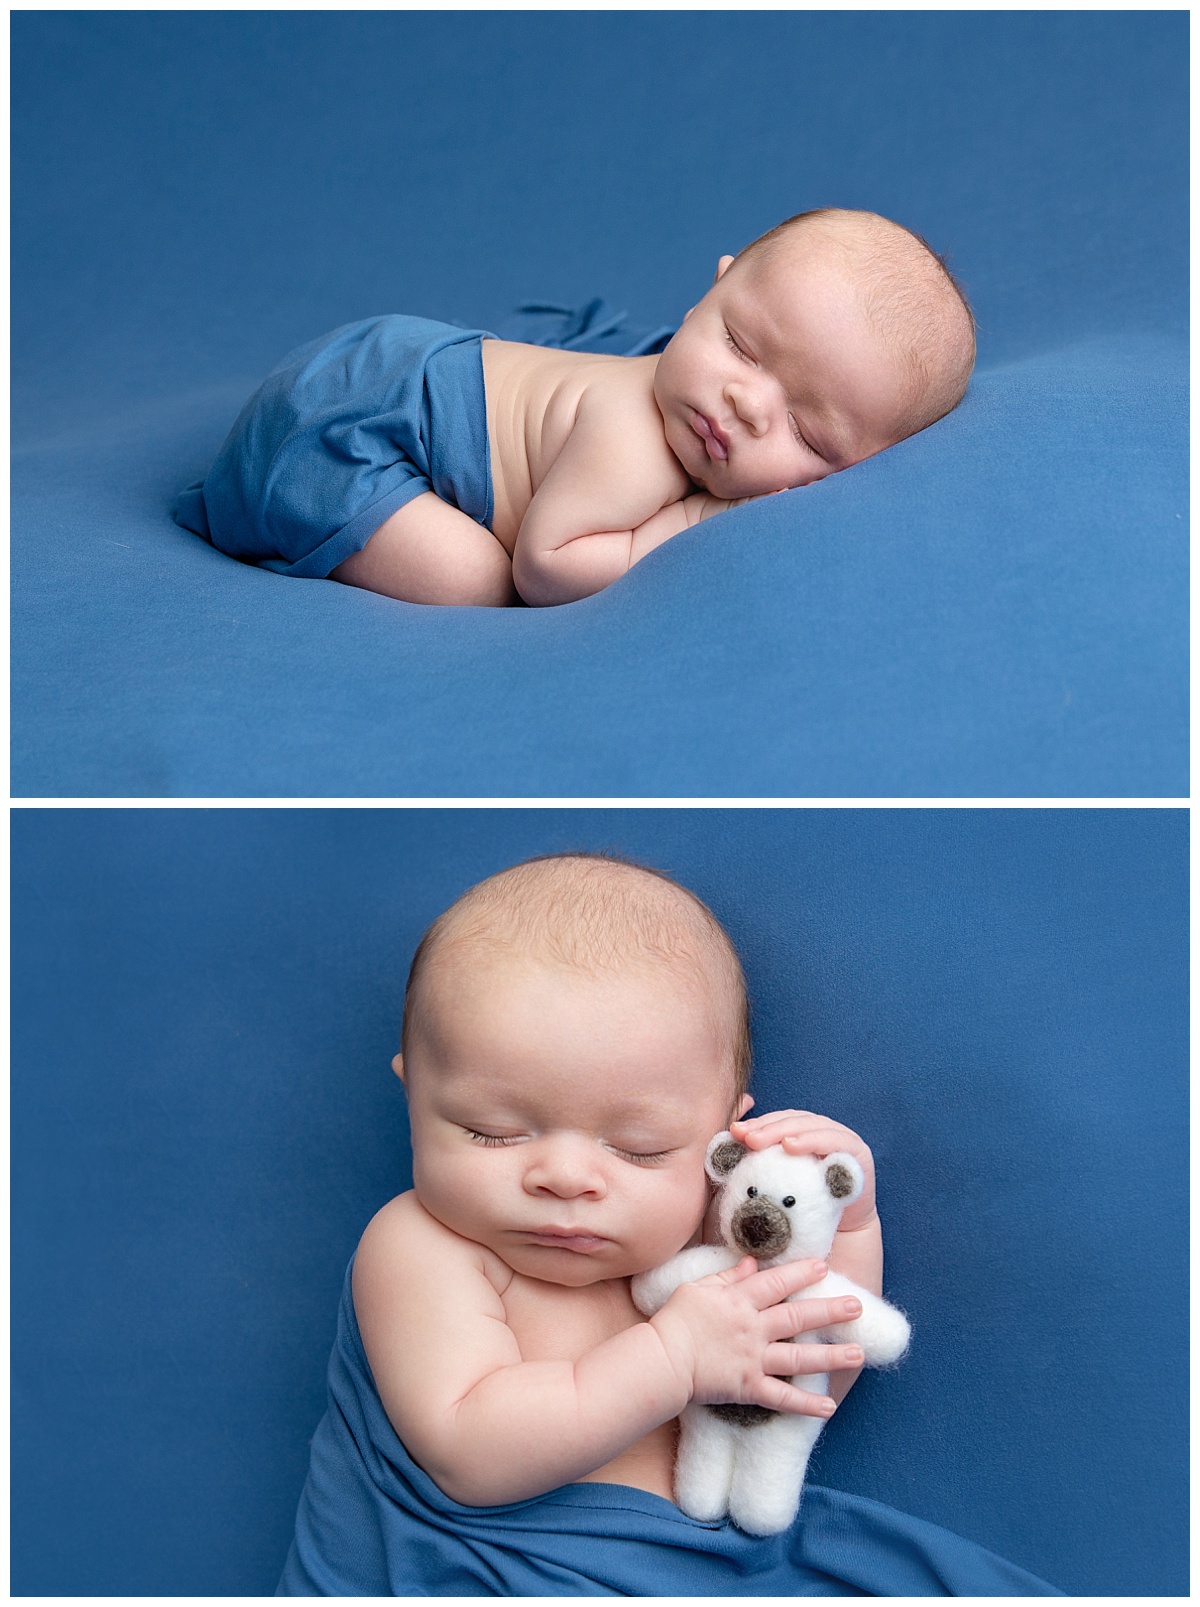 st-louis-newborn-photographer-baby-boy-on-bright-blue-backdrop-with-white-teddy-bear.jpg